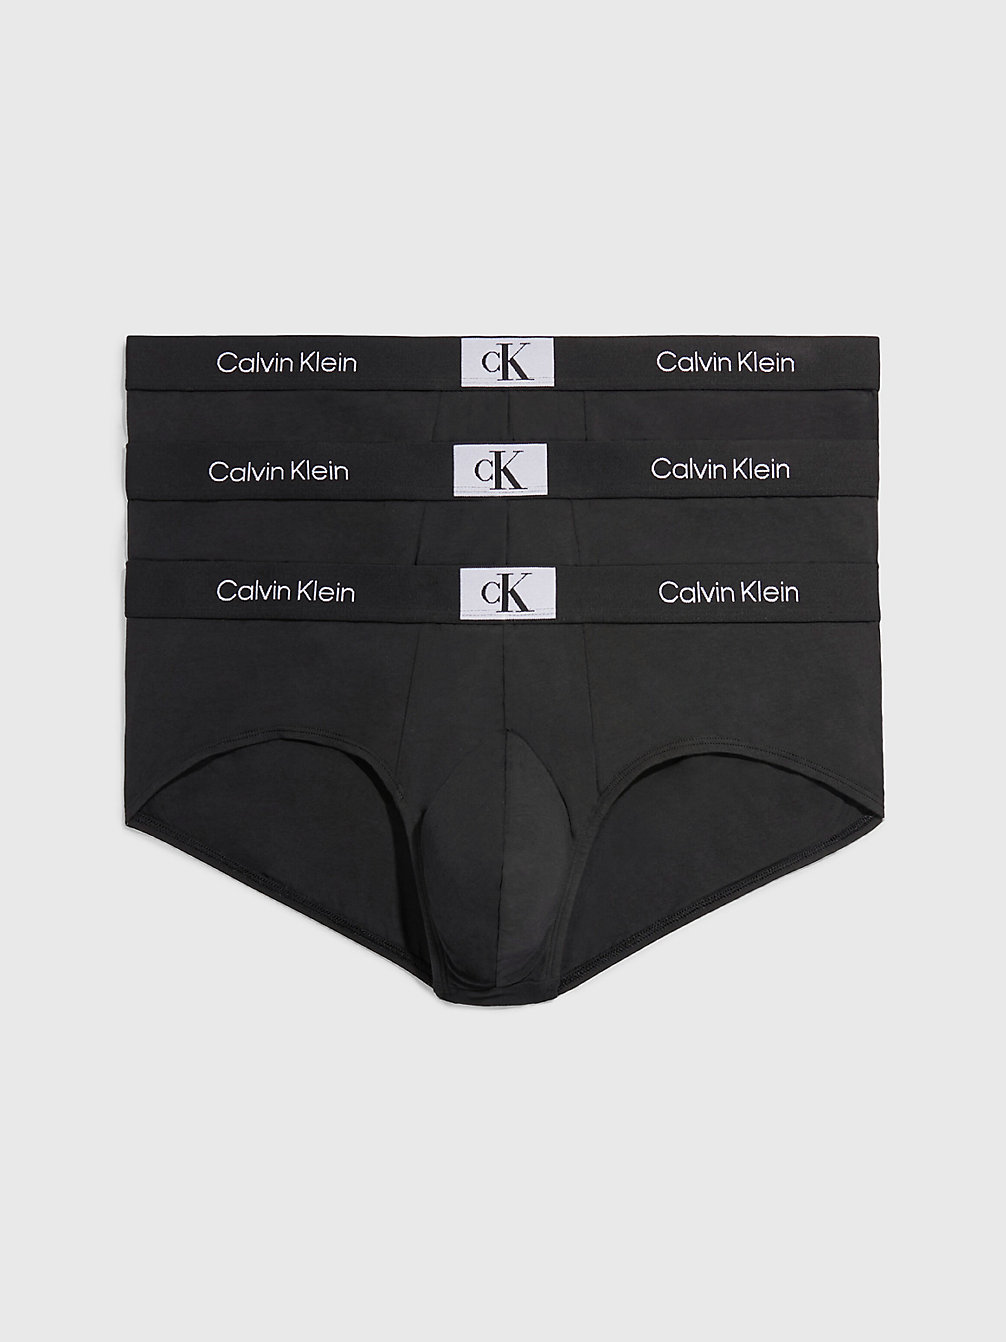 BLACK/BLACK/BLACK 3-Er Pack Boxershorts In Übergröße - Ck96 undefined Herren Calvin Klein